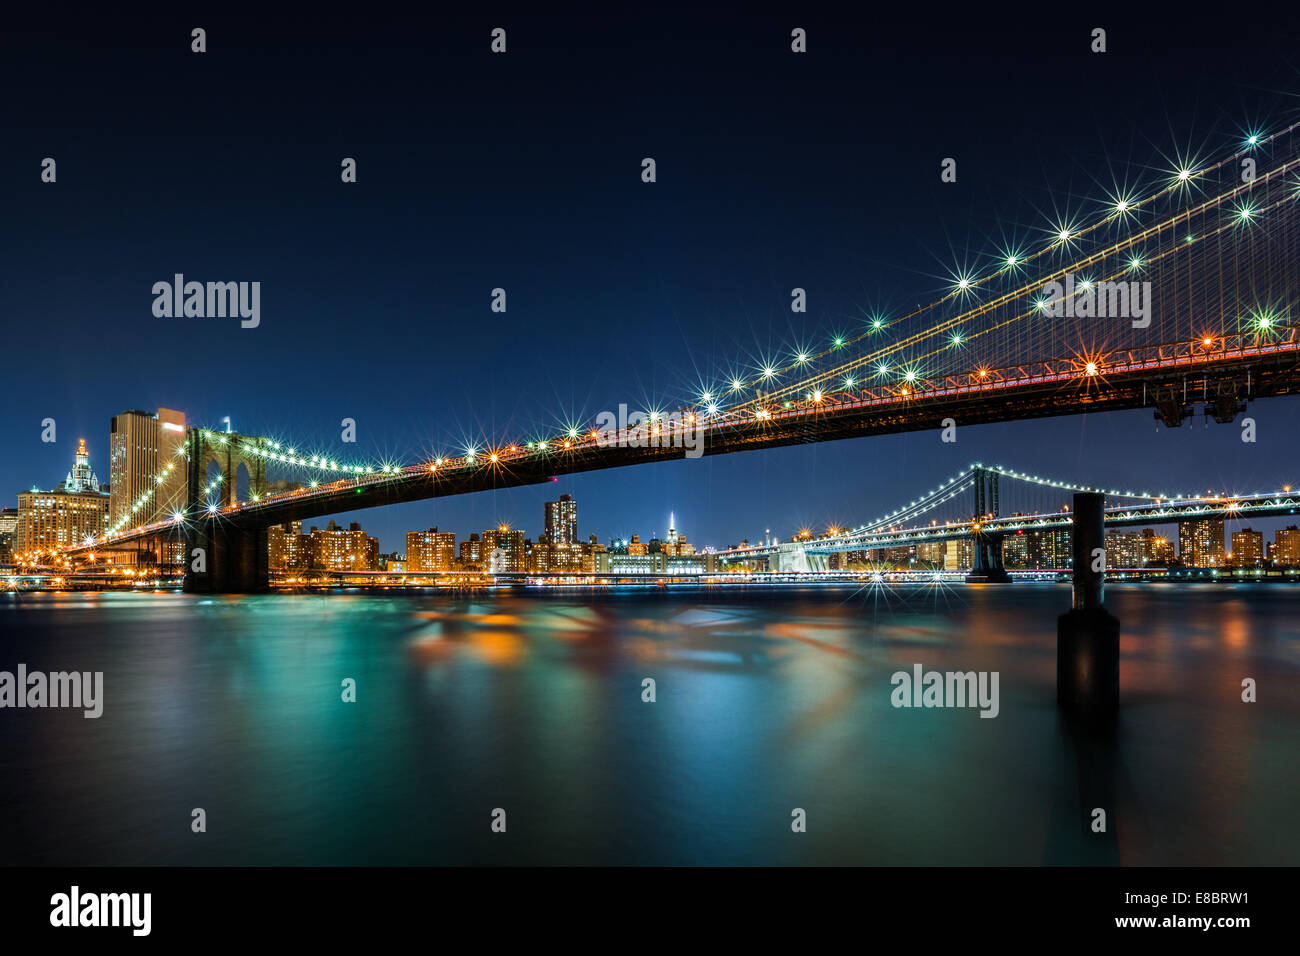 Illuminated Brooklyn Bridge by night Stock Photo